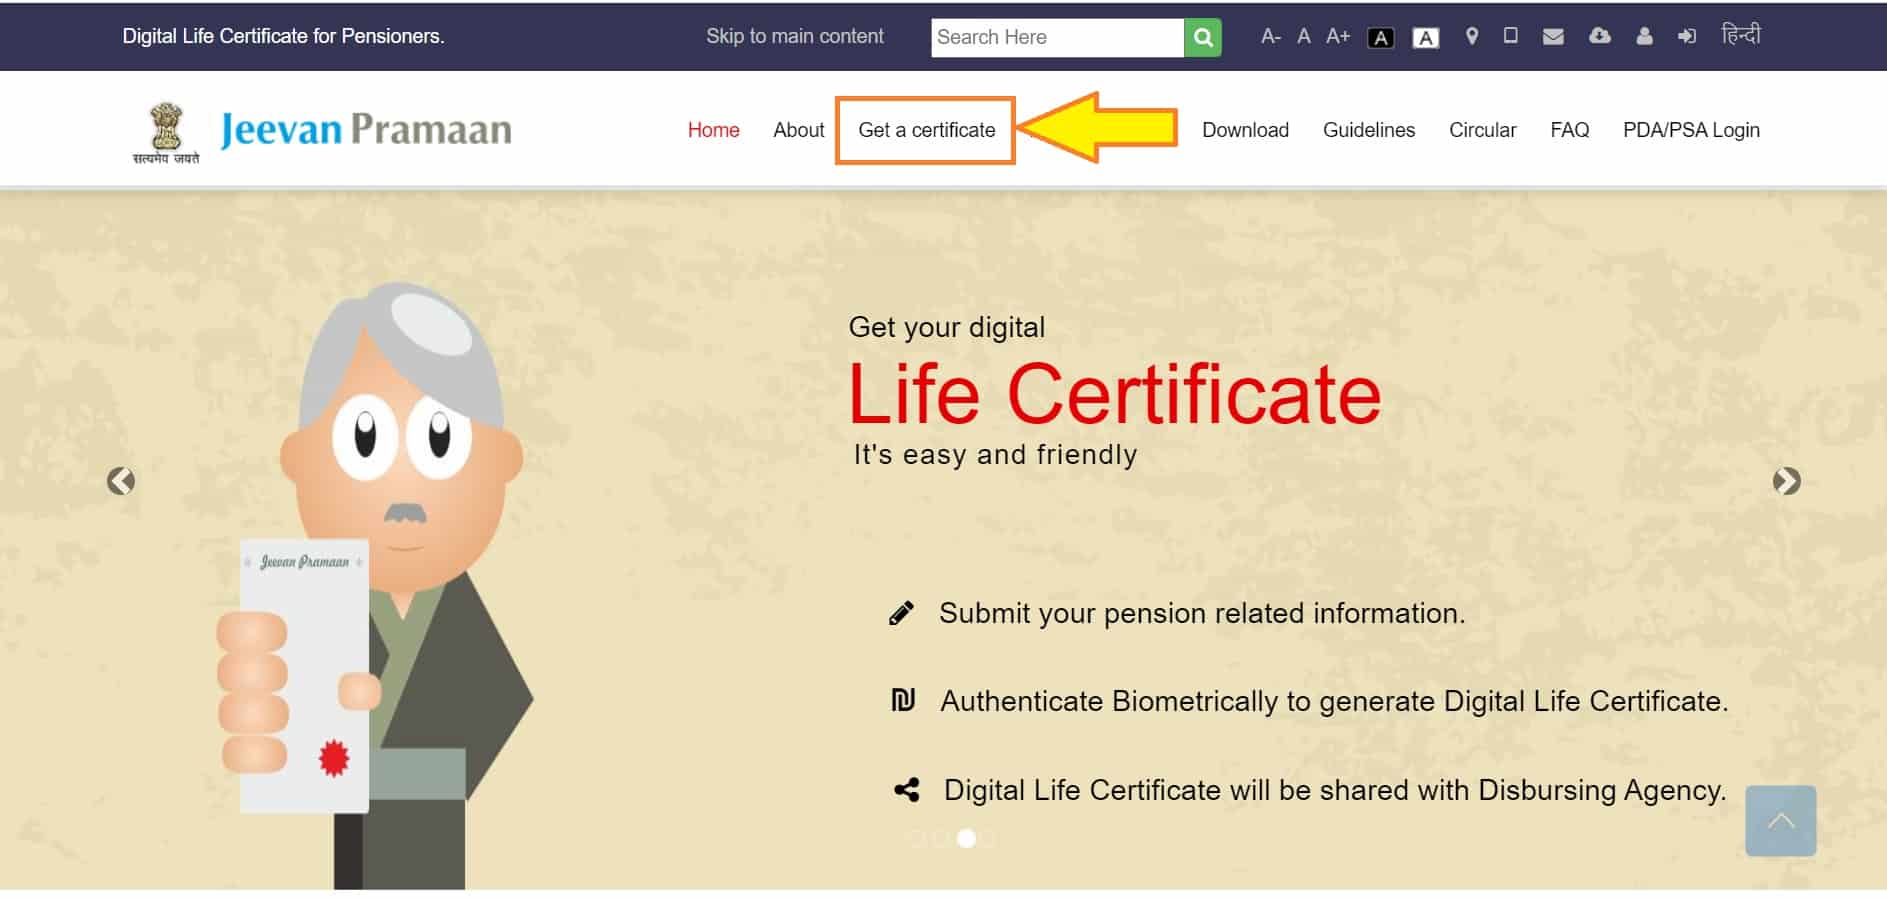  ऑनलाइन आवेदन प्रोसेस online regsitration. Life certificate